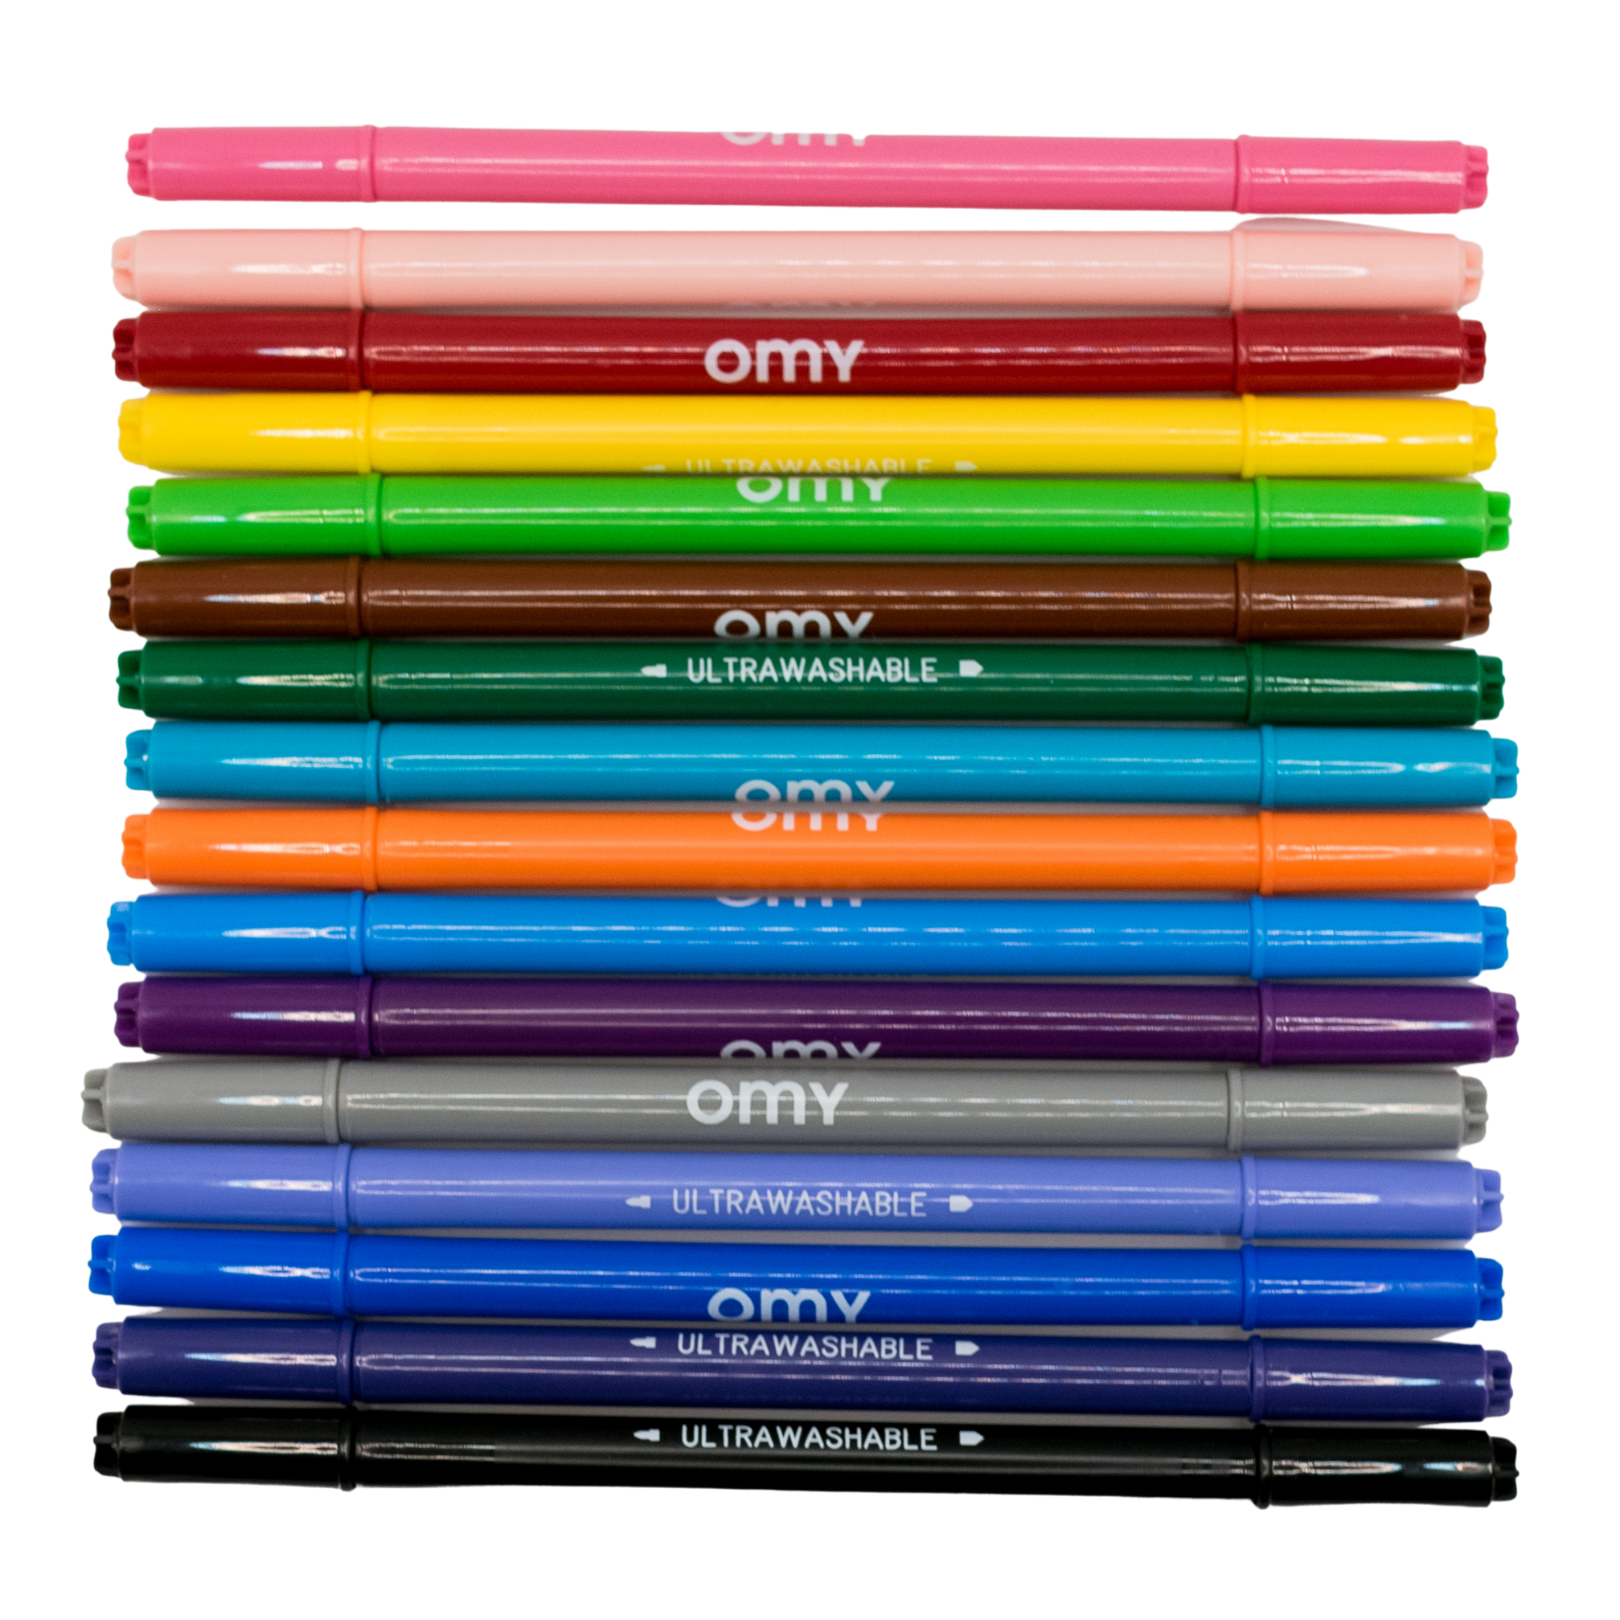 Omy - Matte Gel Crayons – Gratitude Collaborative